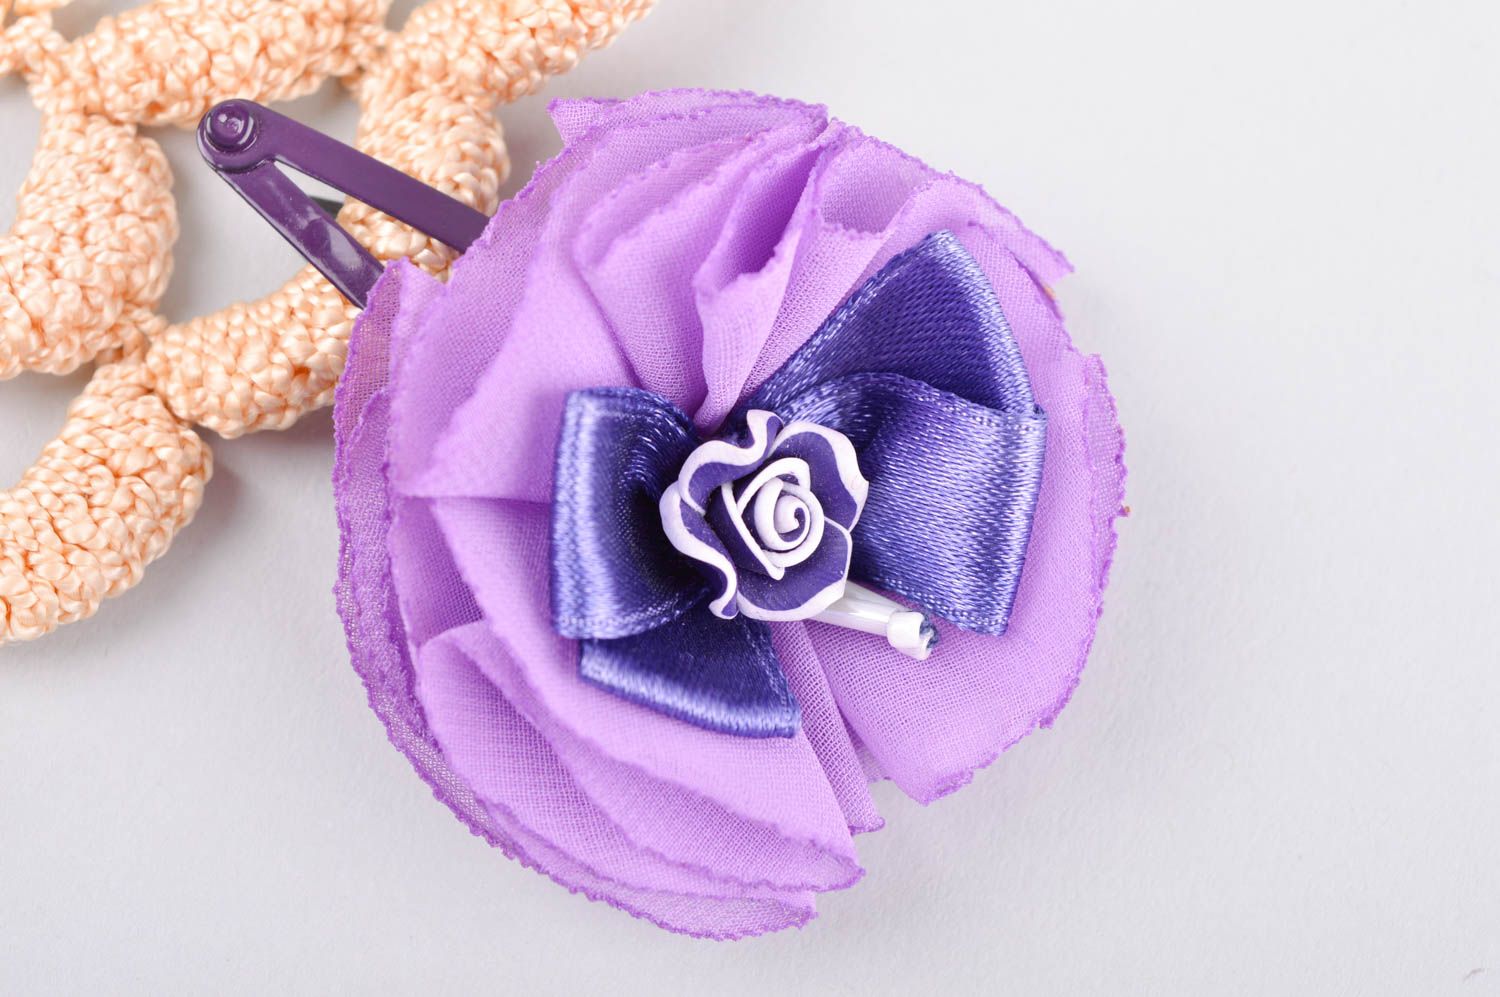 Handmade flower hair clip hair accessories for girls fashion jewelry gift ideas photo 1